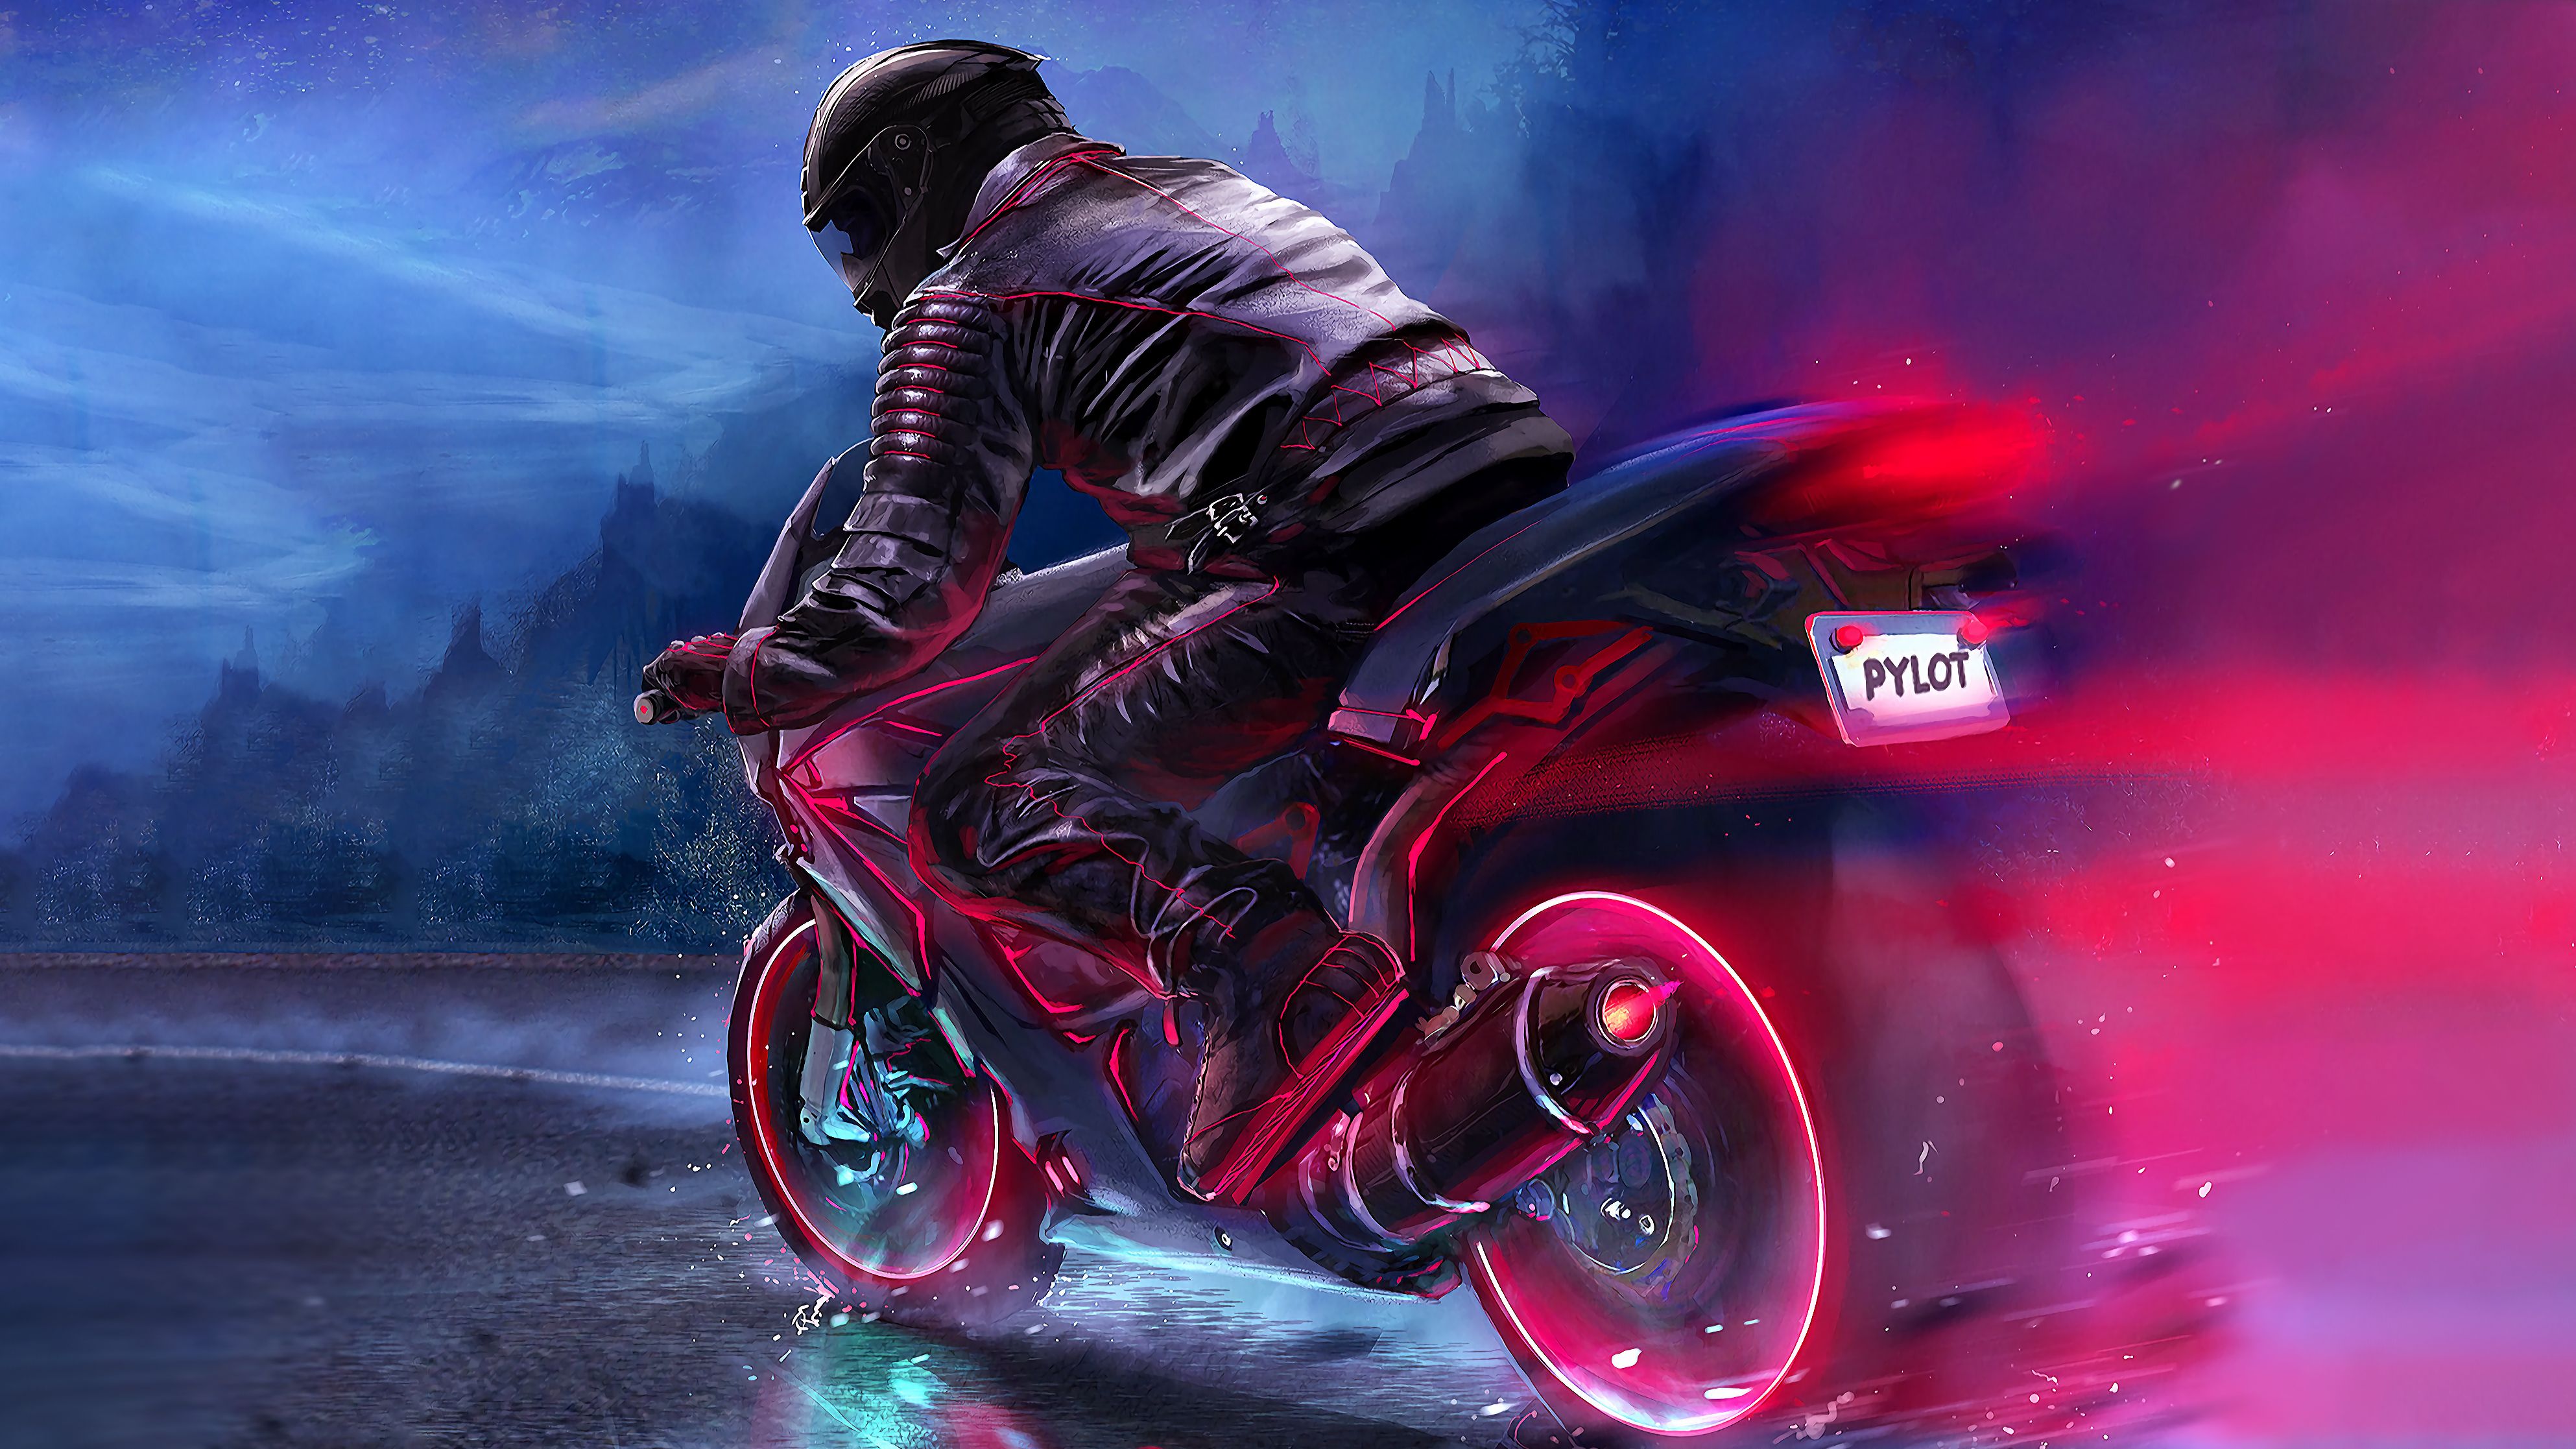 Retro Bike Rider 4k, HD Artist, 4k Wallpaper, Image, Background, Photo and Picture